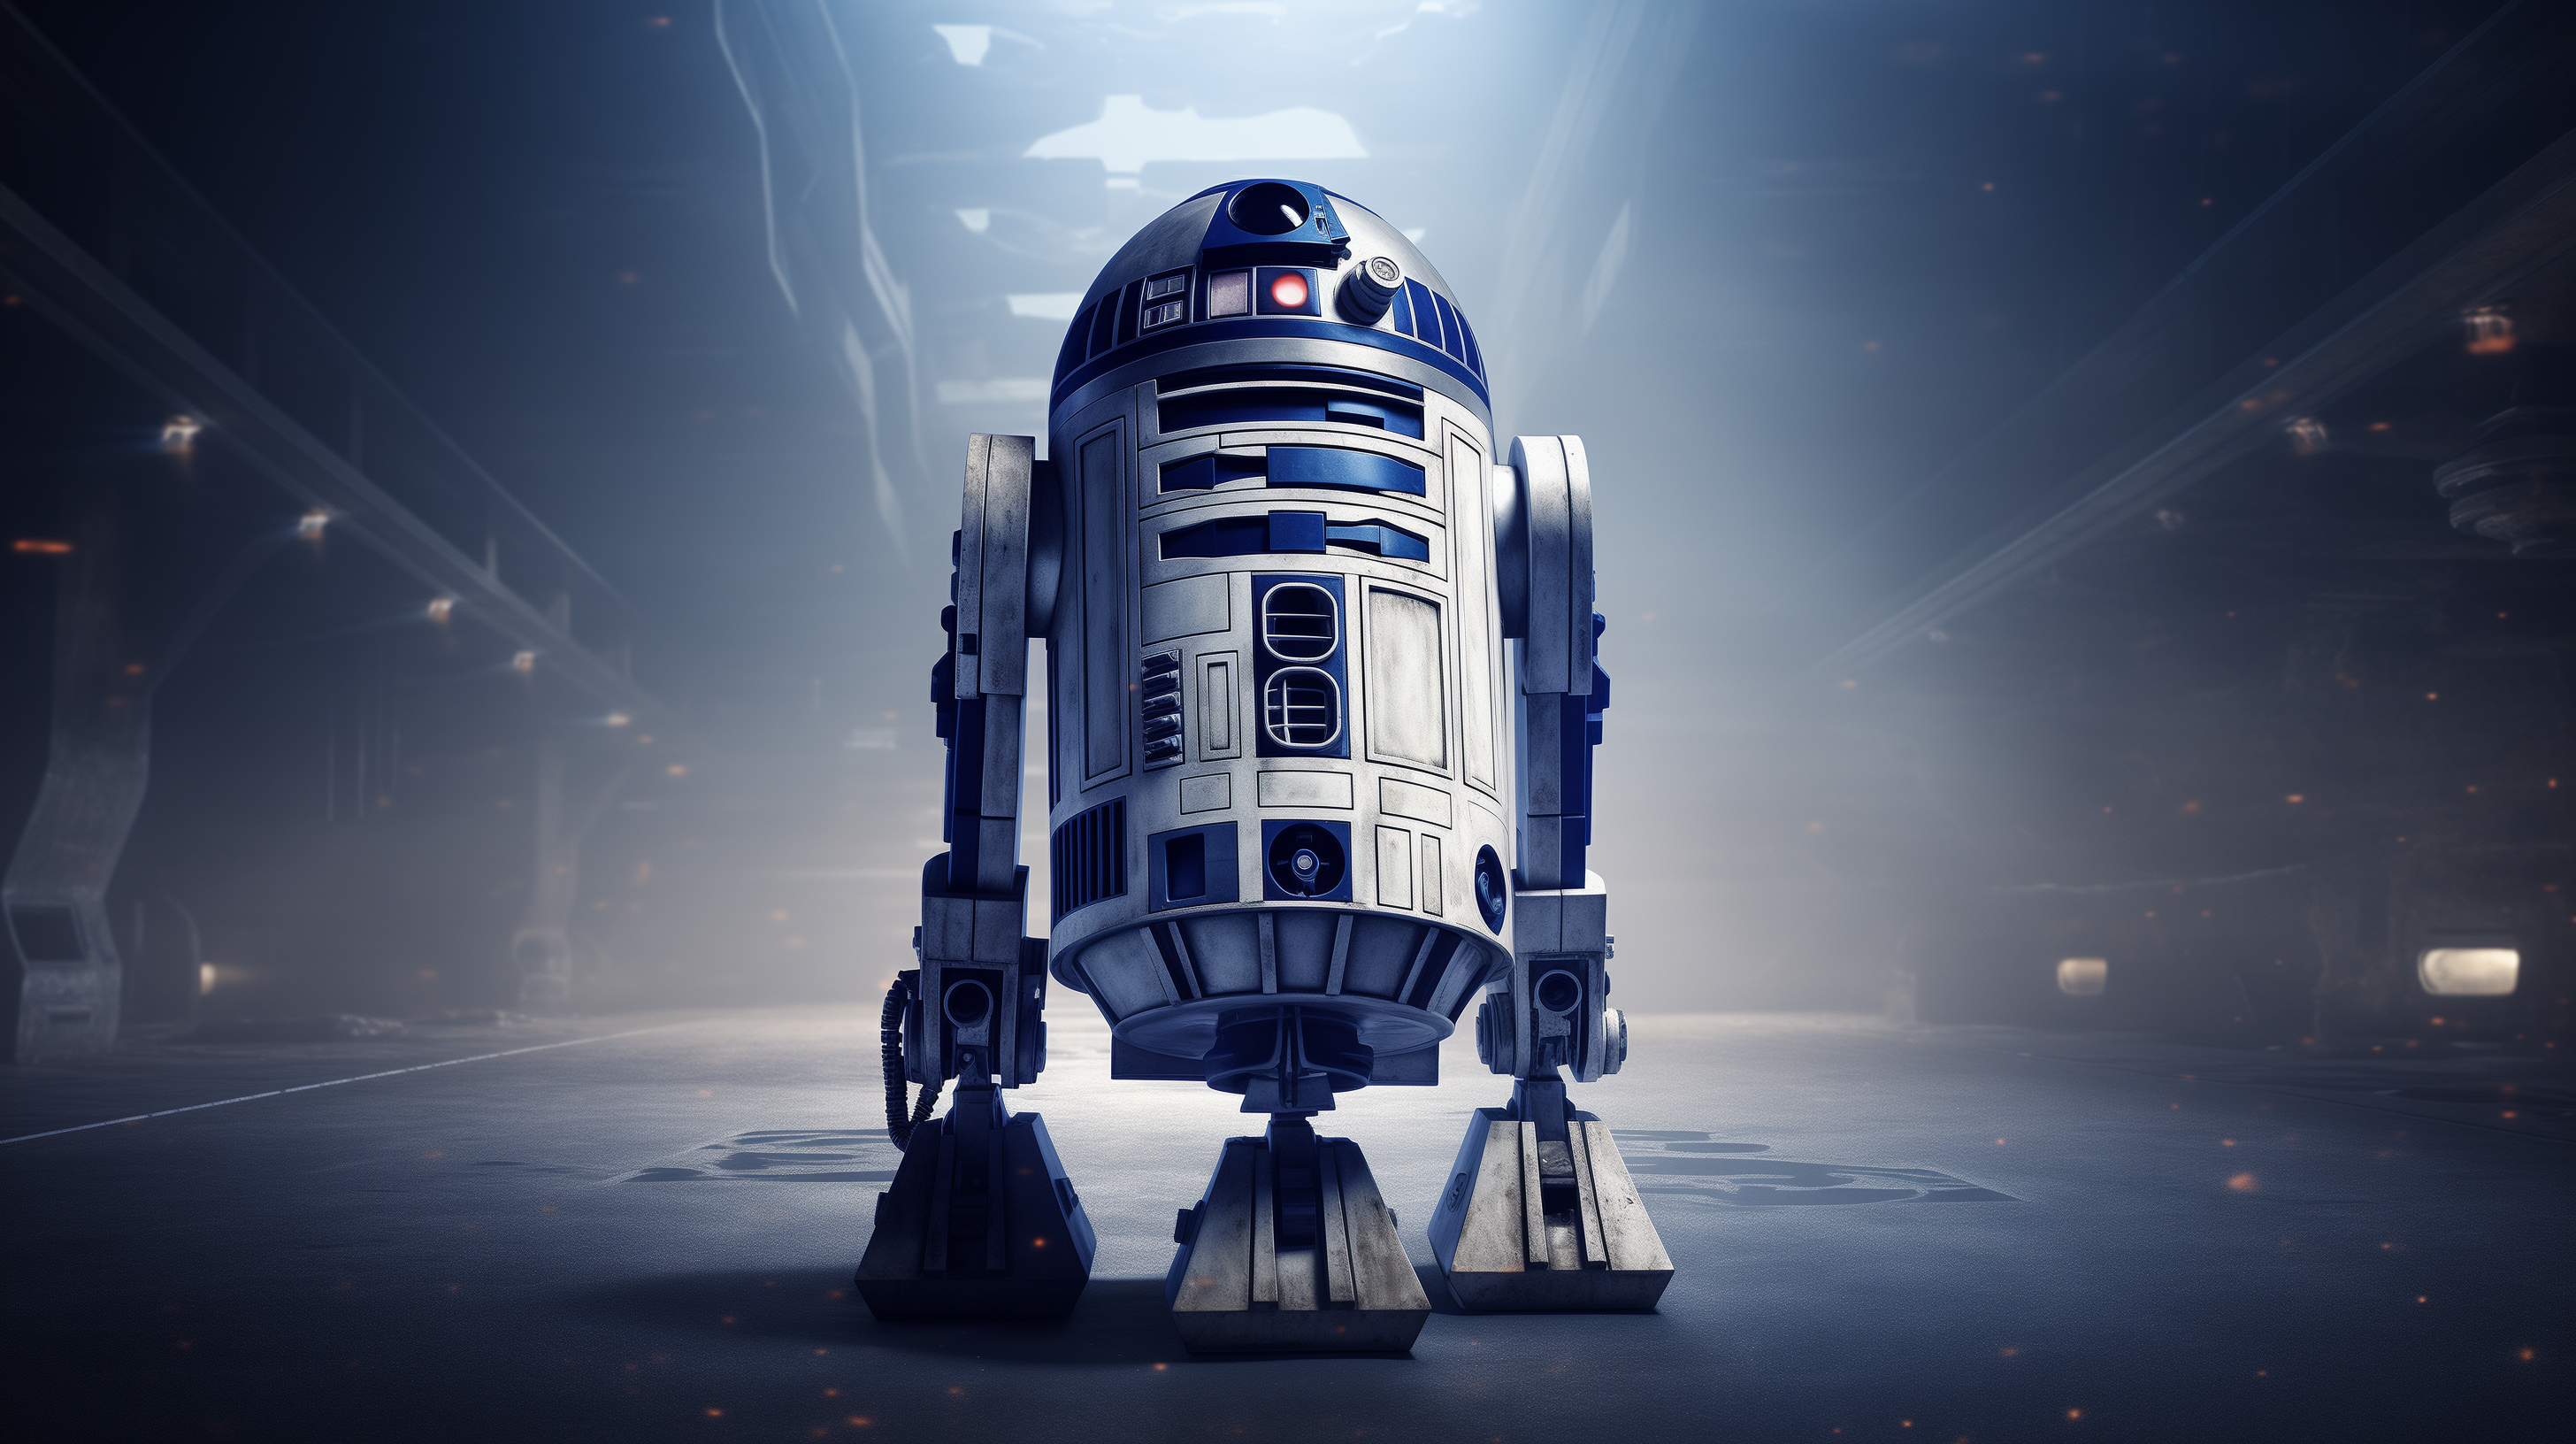 Star Wars HD Wallpapers - Top Best Ultra HD Star Wars Backgrounds